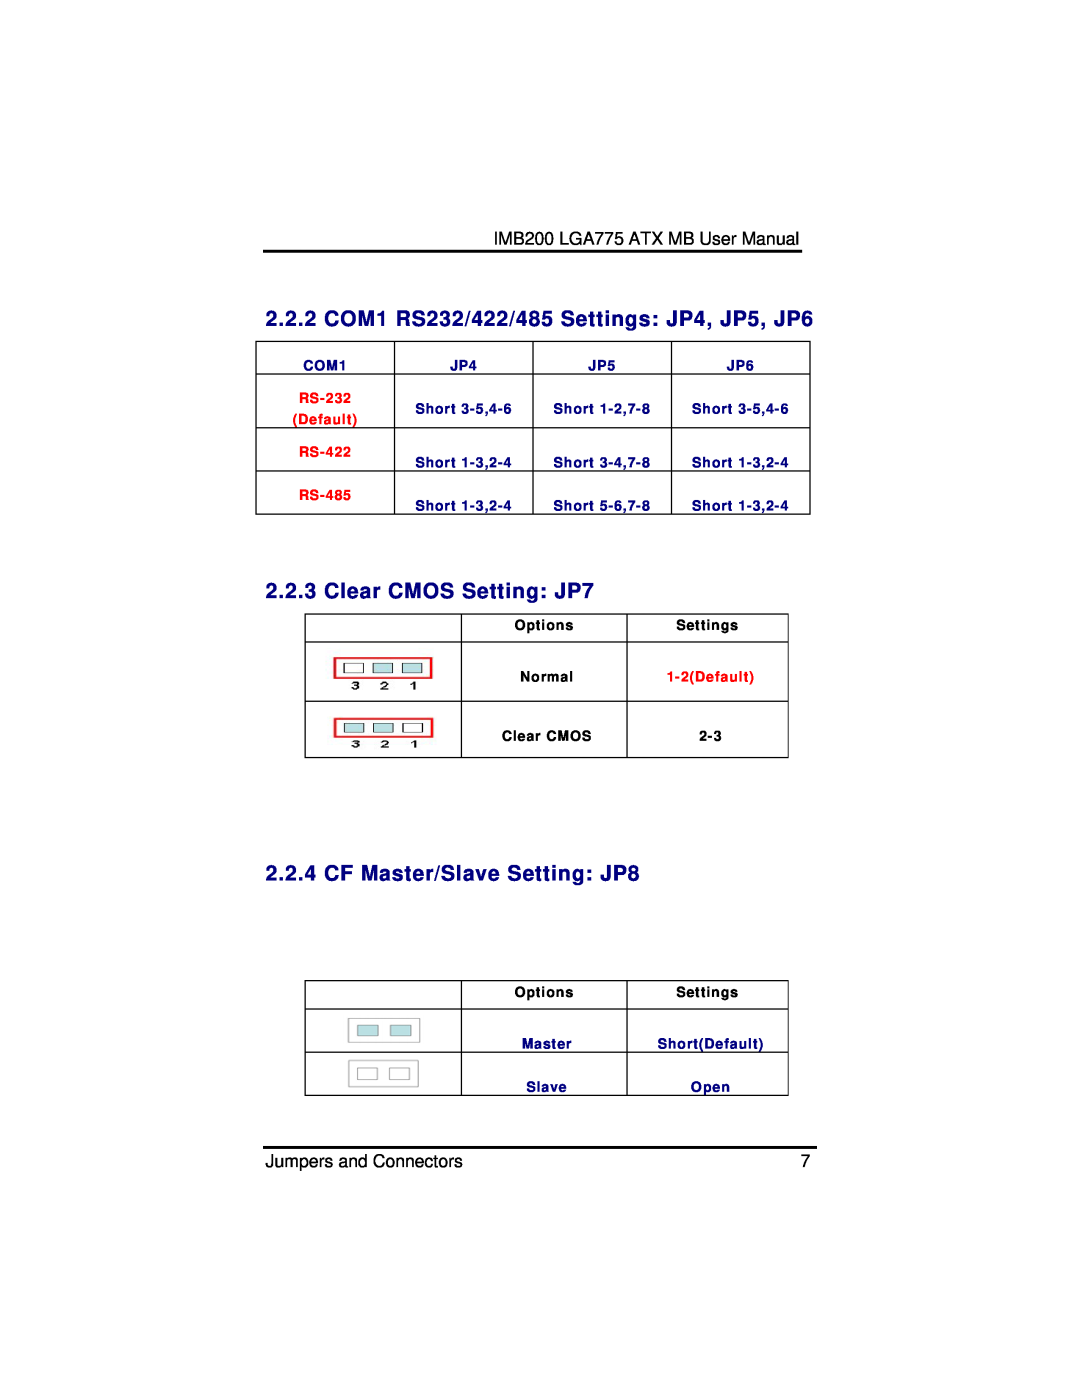 Intel IMB200VGE 2.2.2 COM1 RS232/422/485 Settings JP4, JP5, JP6, Clear CMOS Setting JP7, CF Master/Slave Setting JP8 